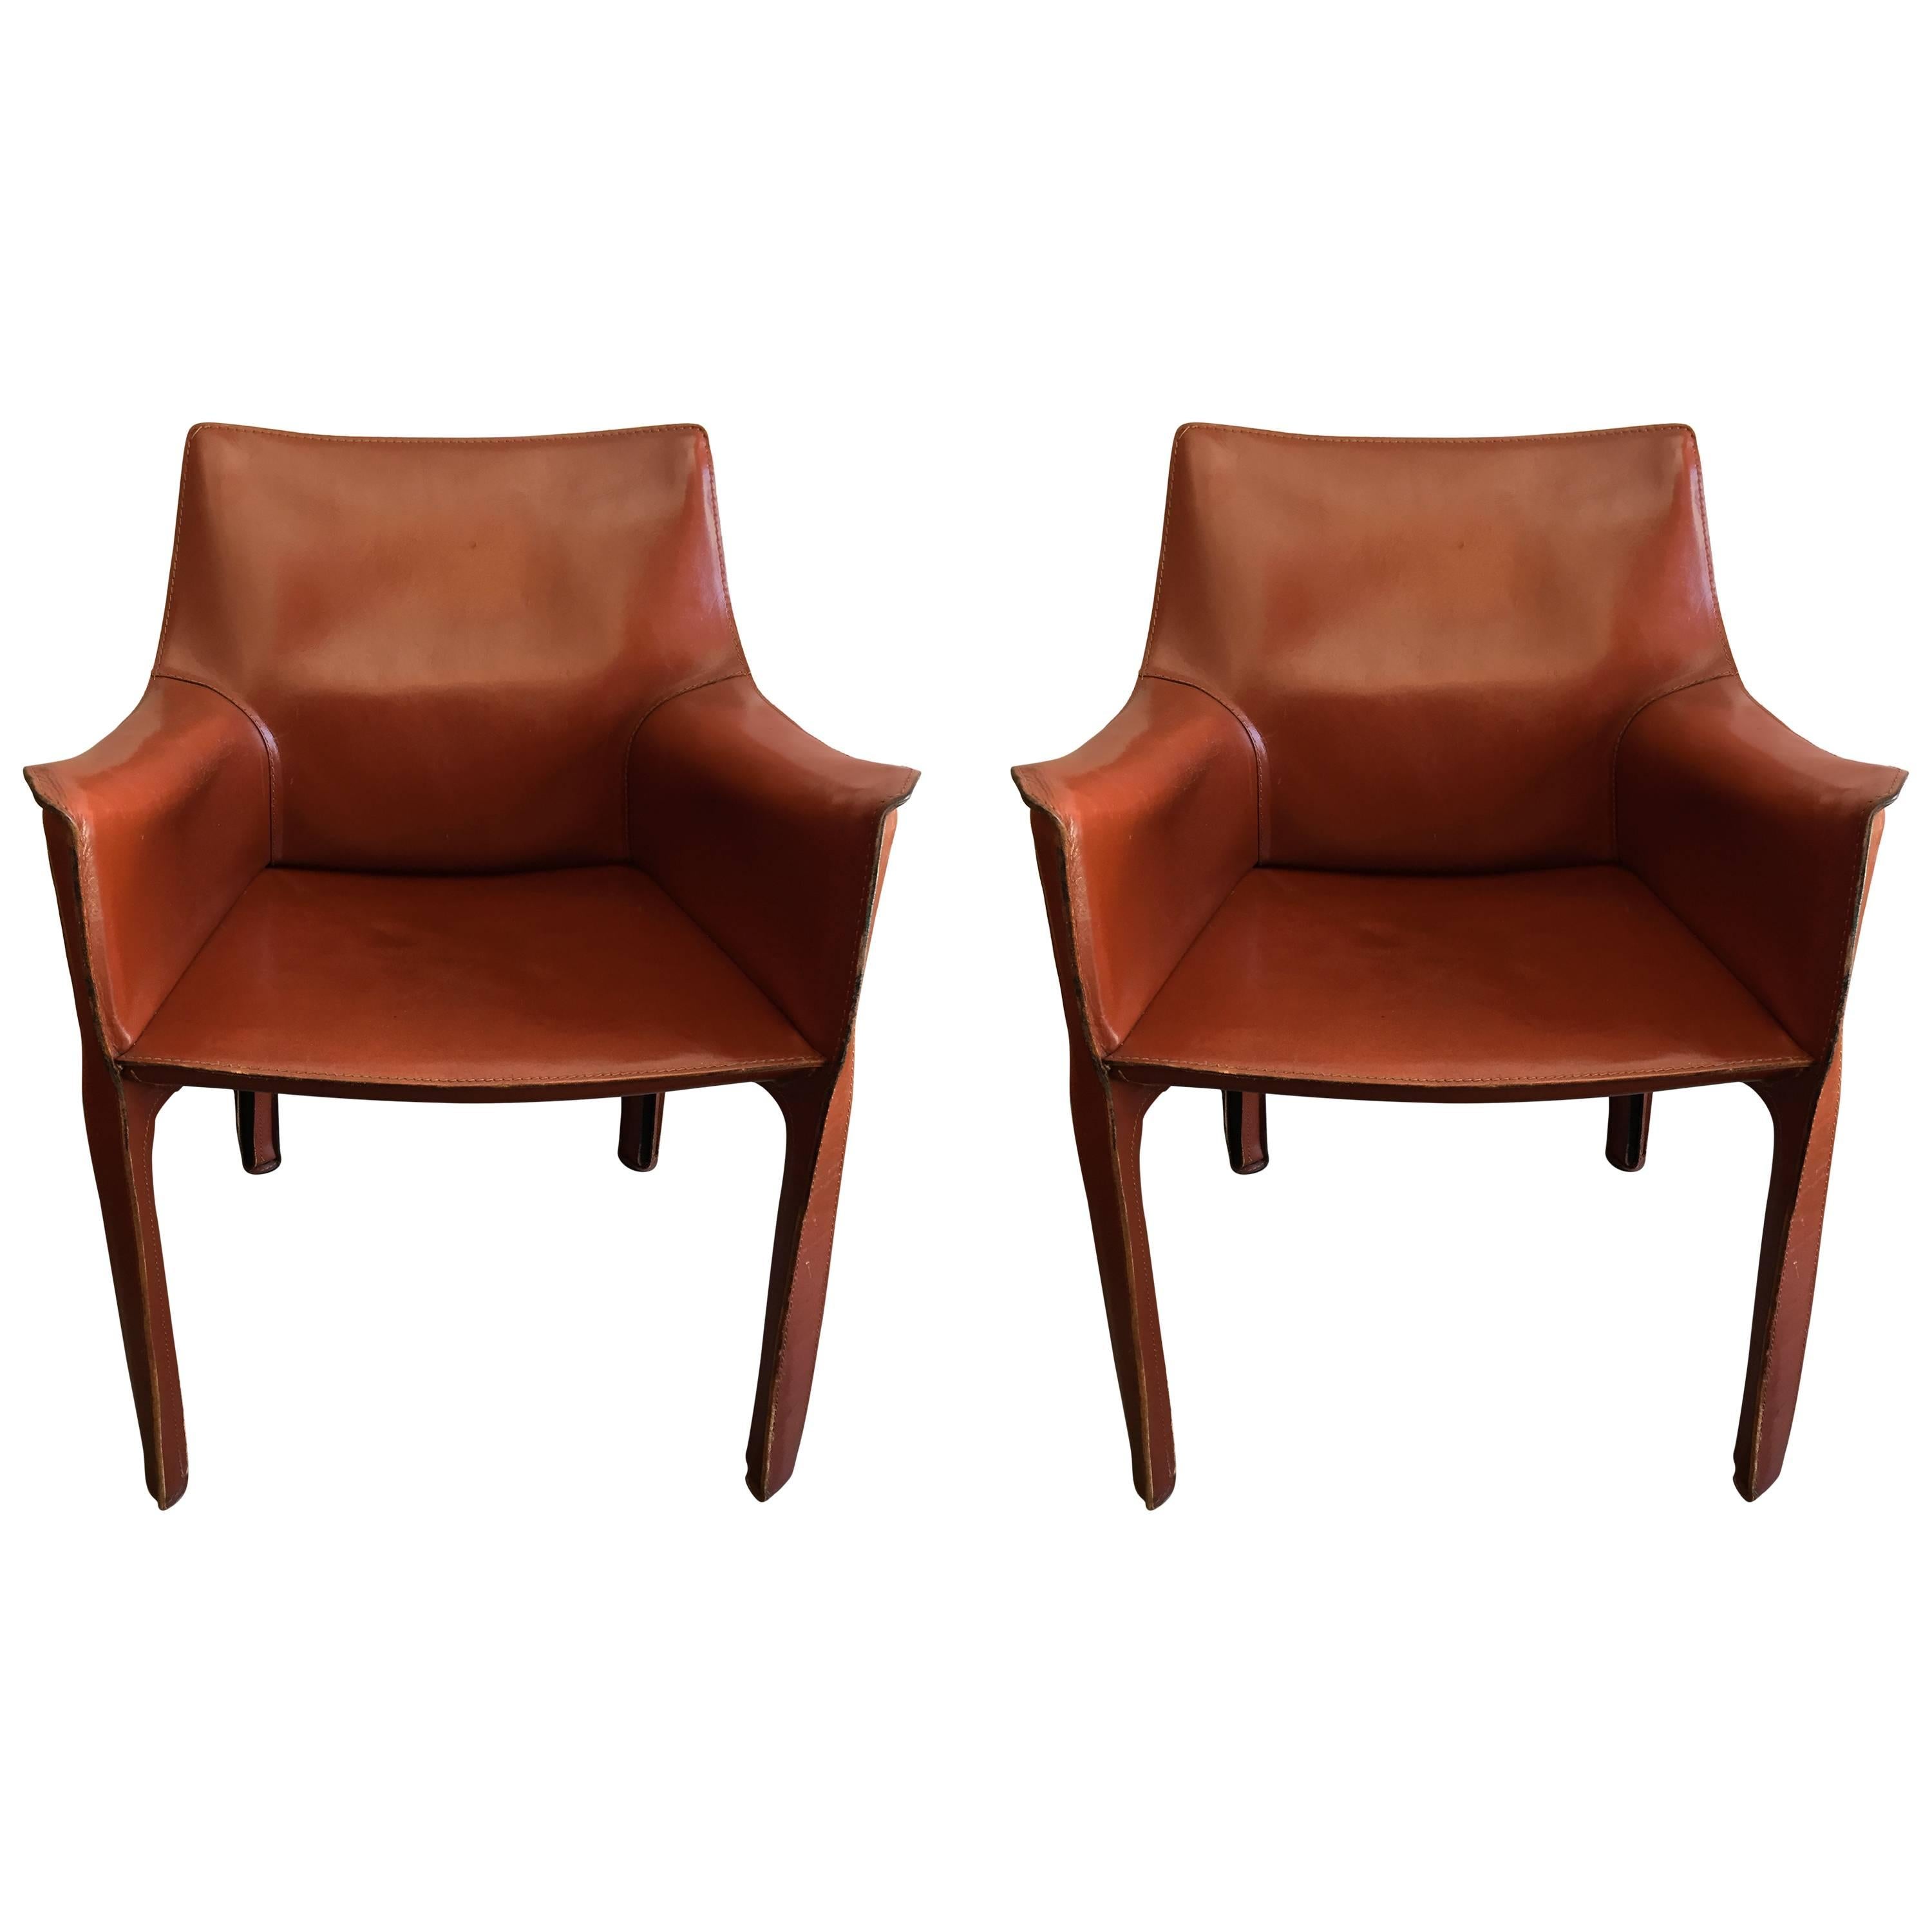 Pair of Mario Bellini Cassina Cab Leather Chairs